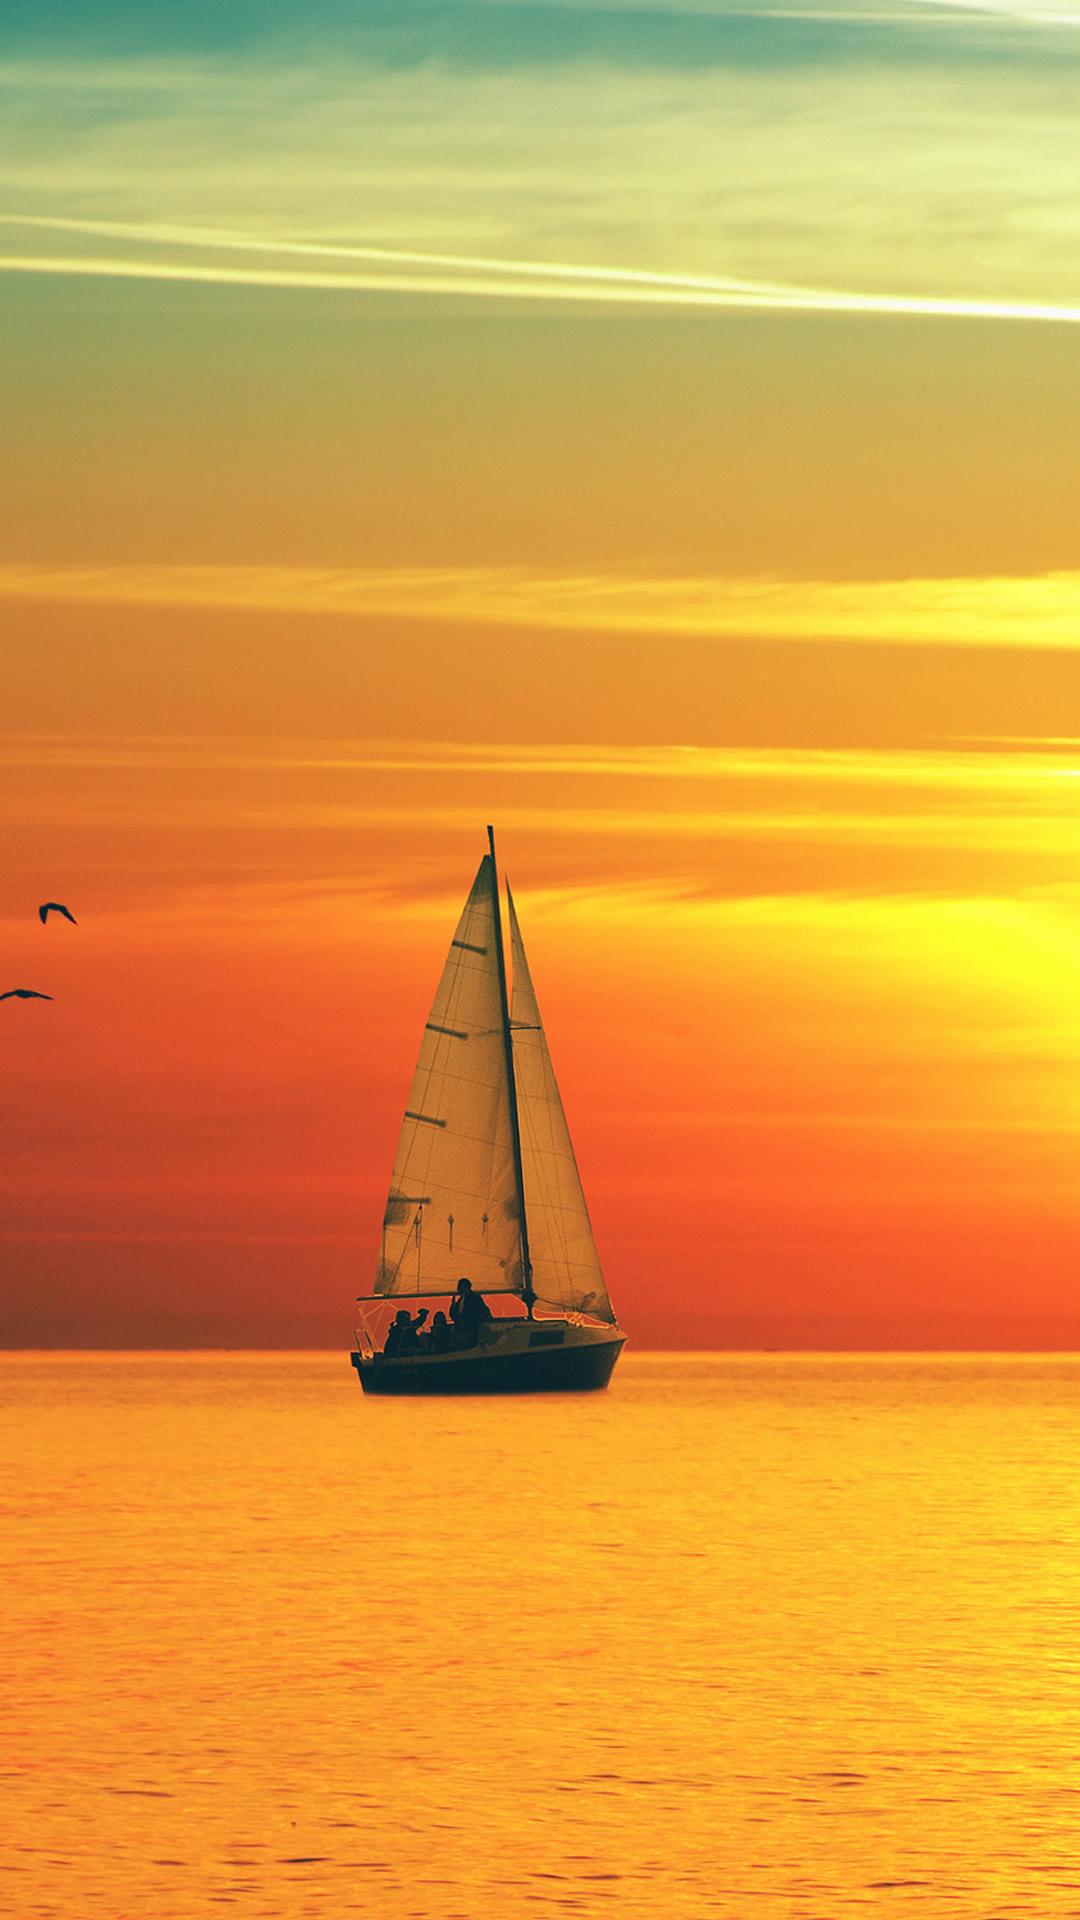 Golden Sunset Ocean Sail iPhone 8 Wallpaper Free Download